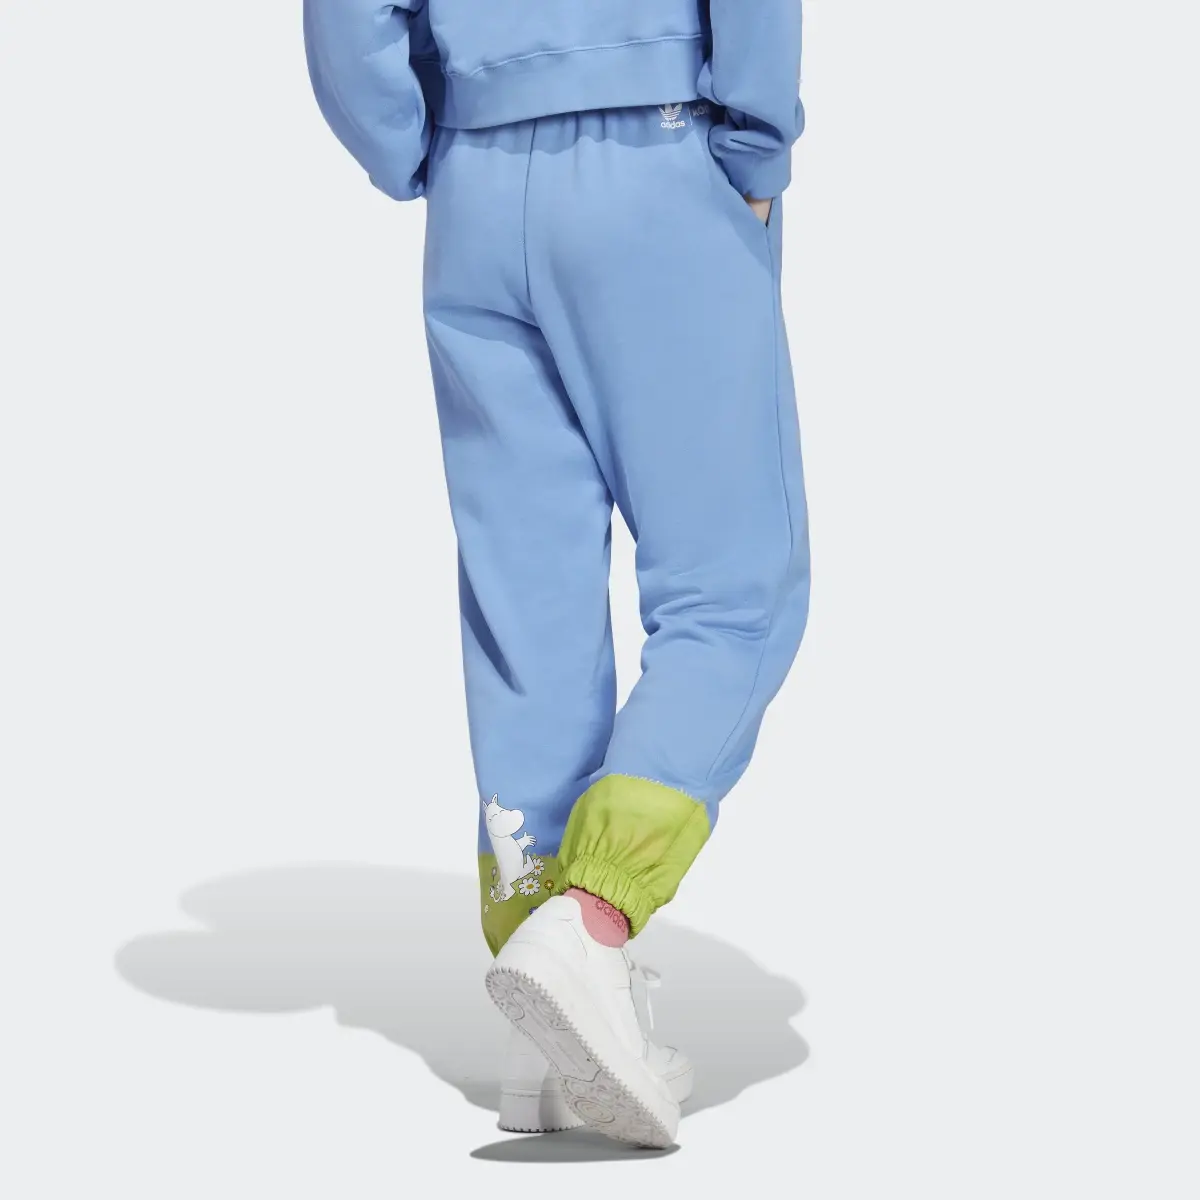 Adidas Originals x Moomin Graphic Sweat Pants. 2